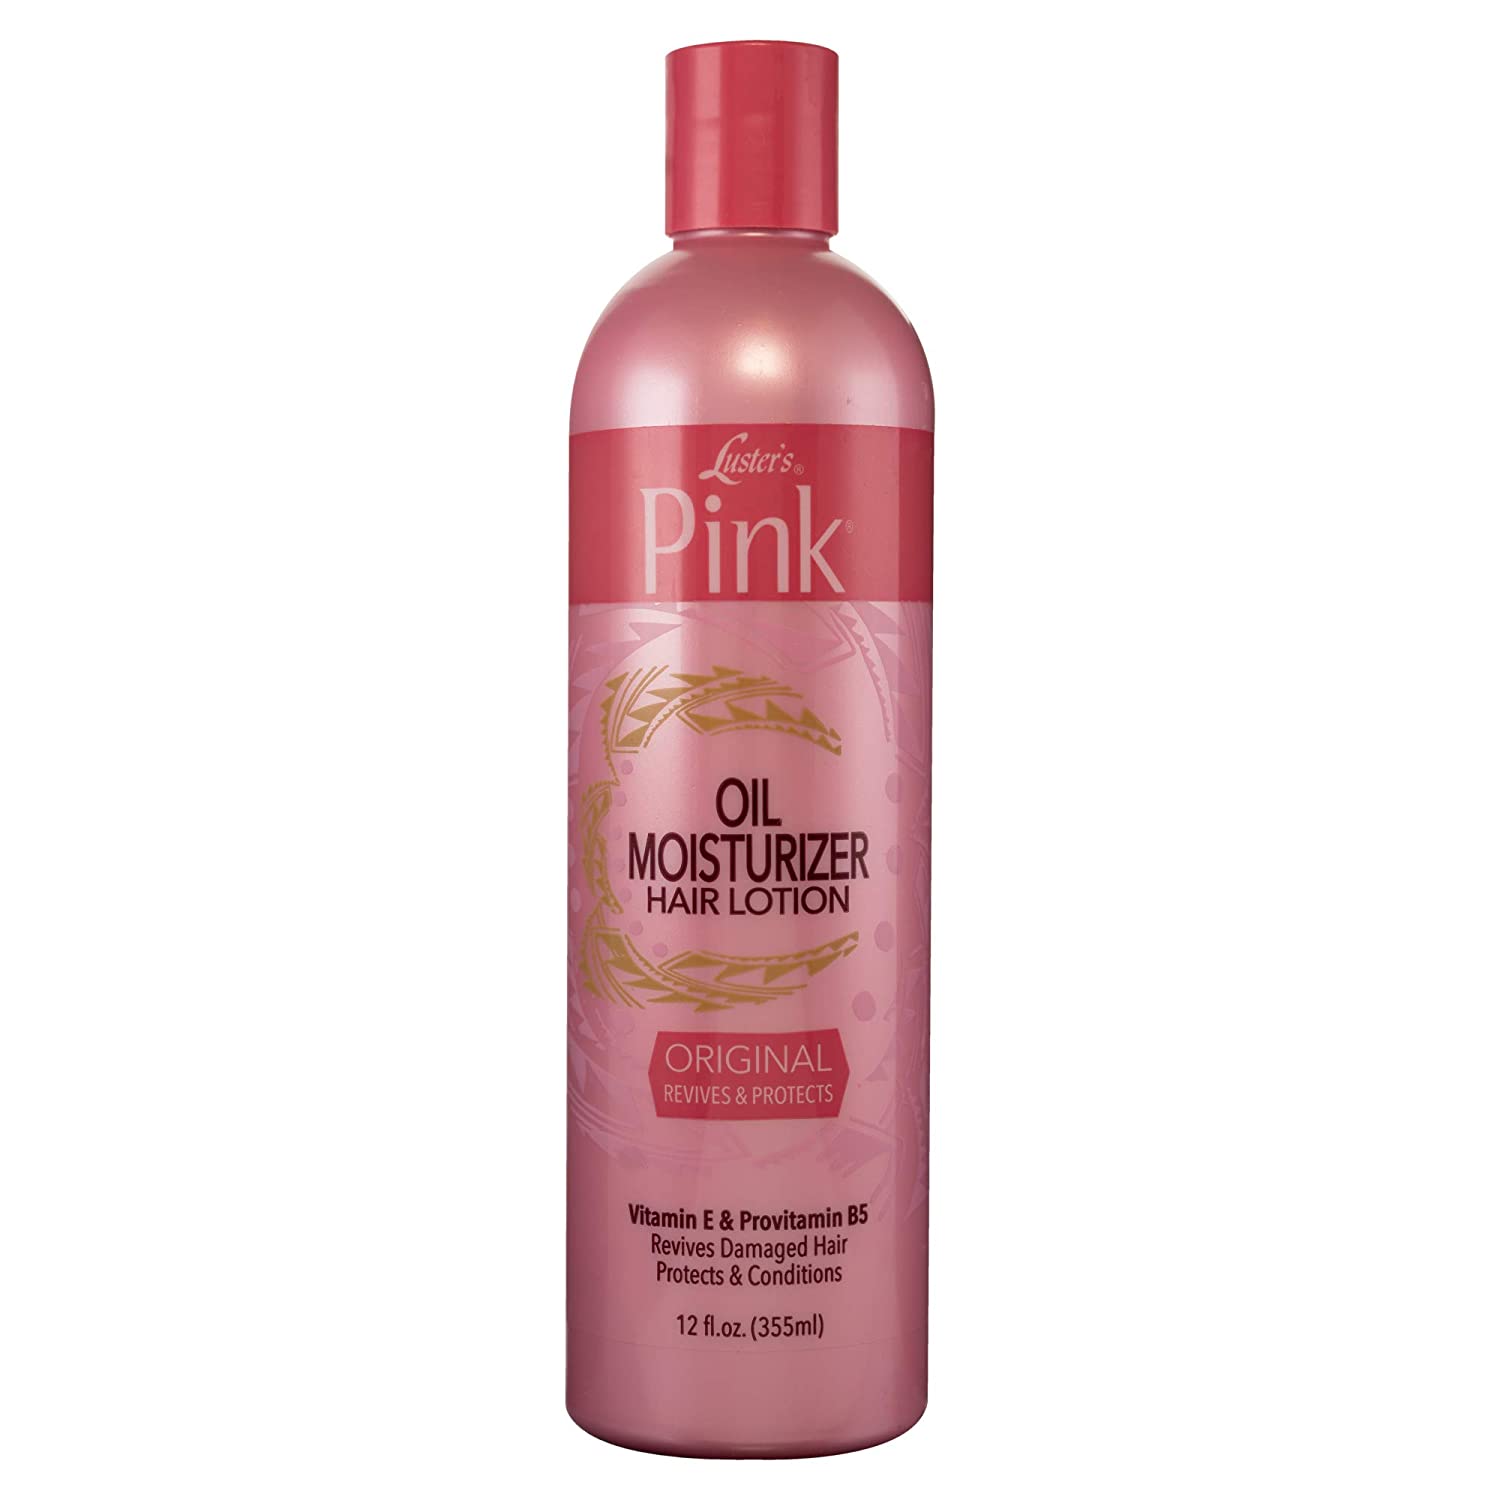 4th Ave Market: Luster's Pink Oil Moisturizer Hair Lotion, Original, 12 Oz